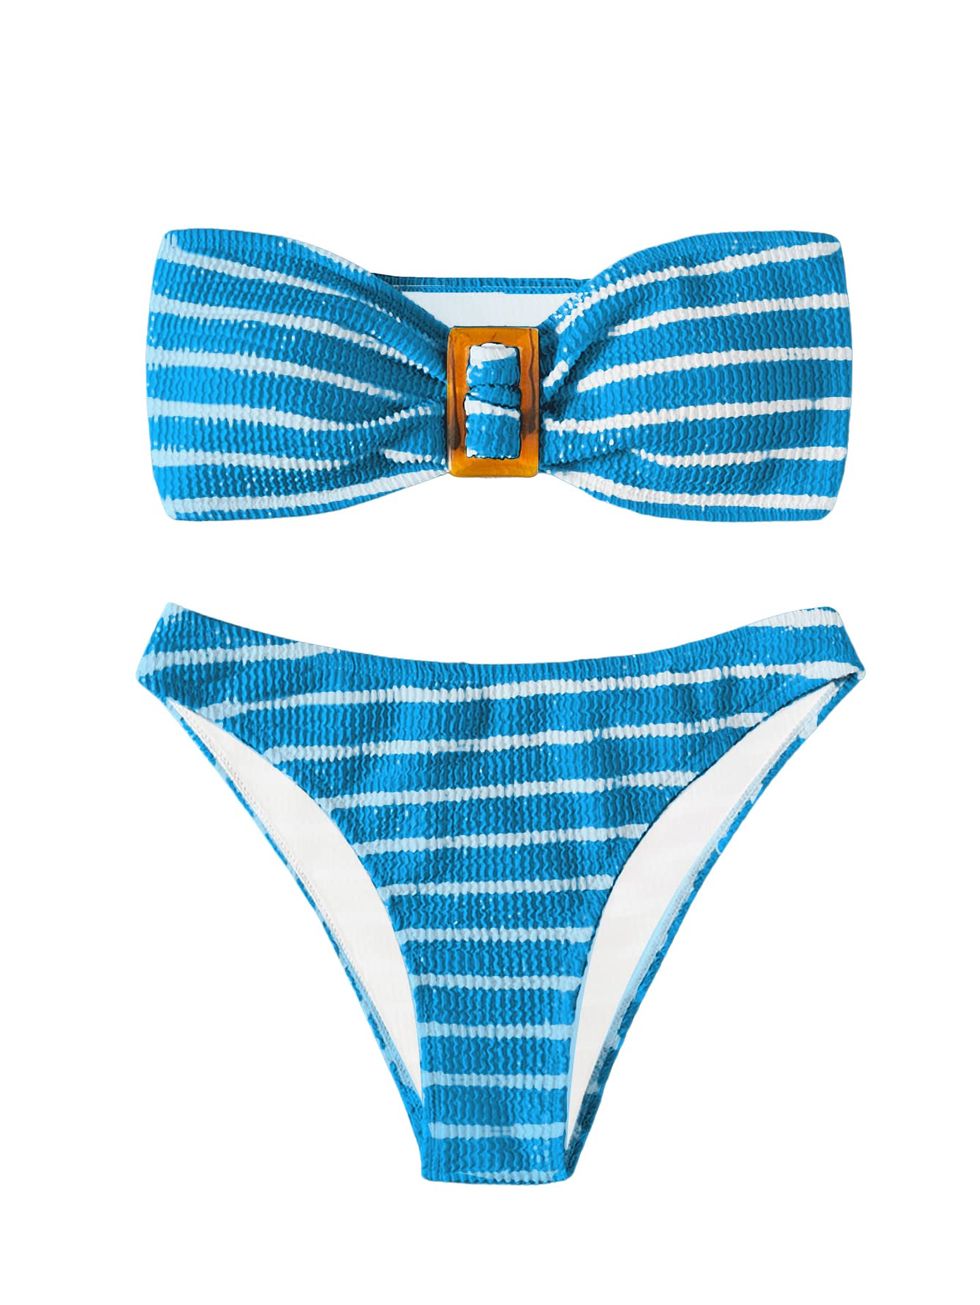 Striped 2-piece swimsuit for women